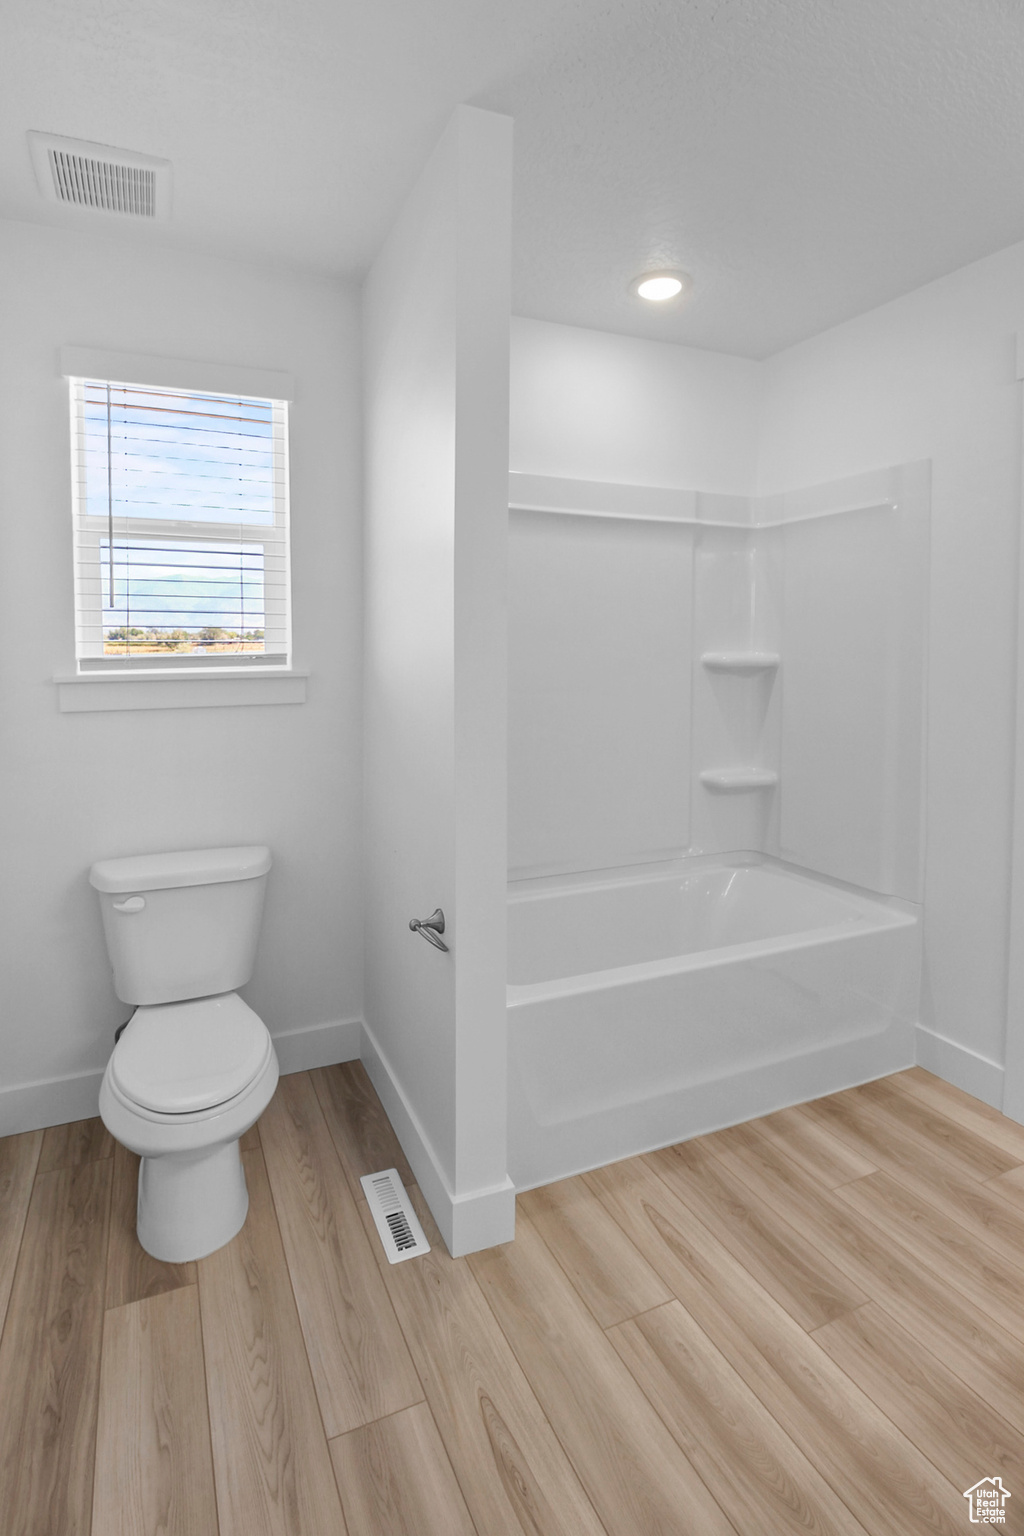 Bathroom featuring bathtub / shower combination, toilet, and hardwood / wood-style flooring